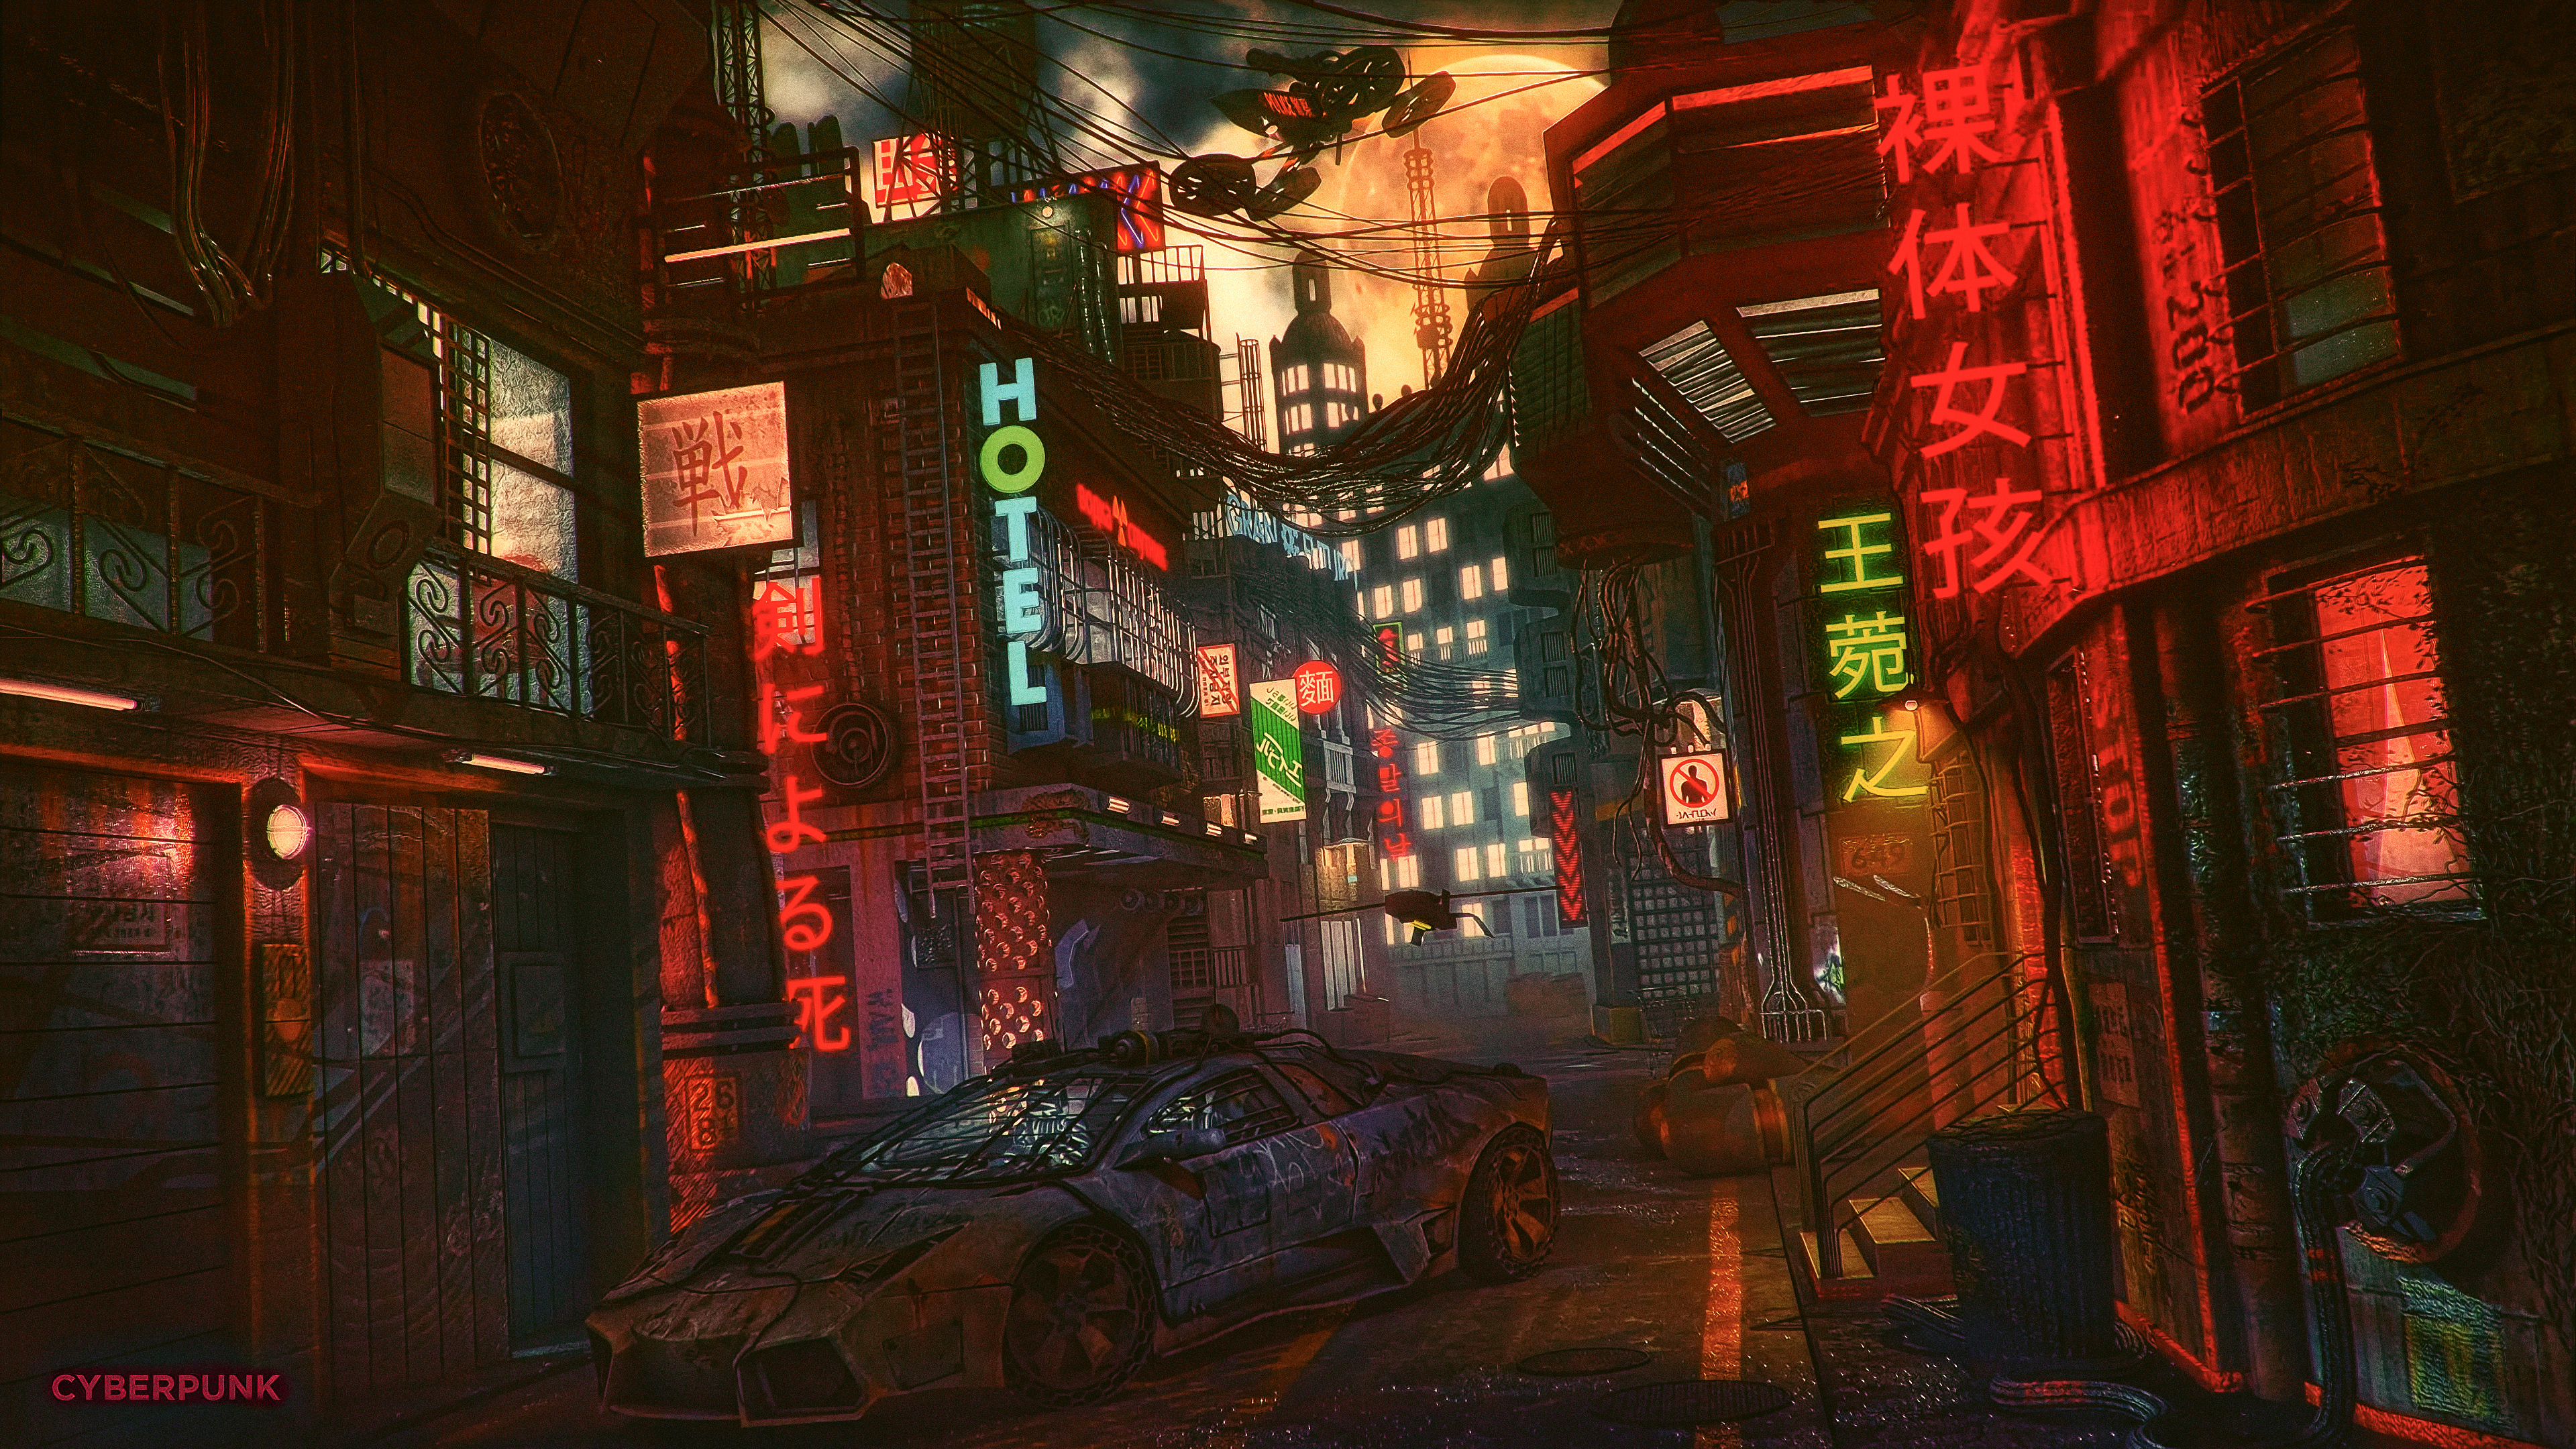 Cyberpunk 4k  Ultra HD Wallpaper  Background  Image 